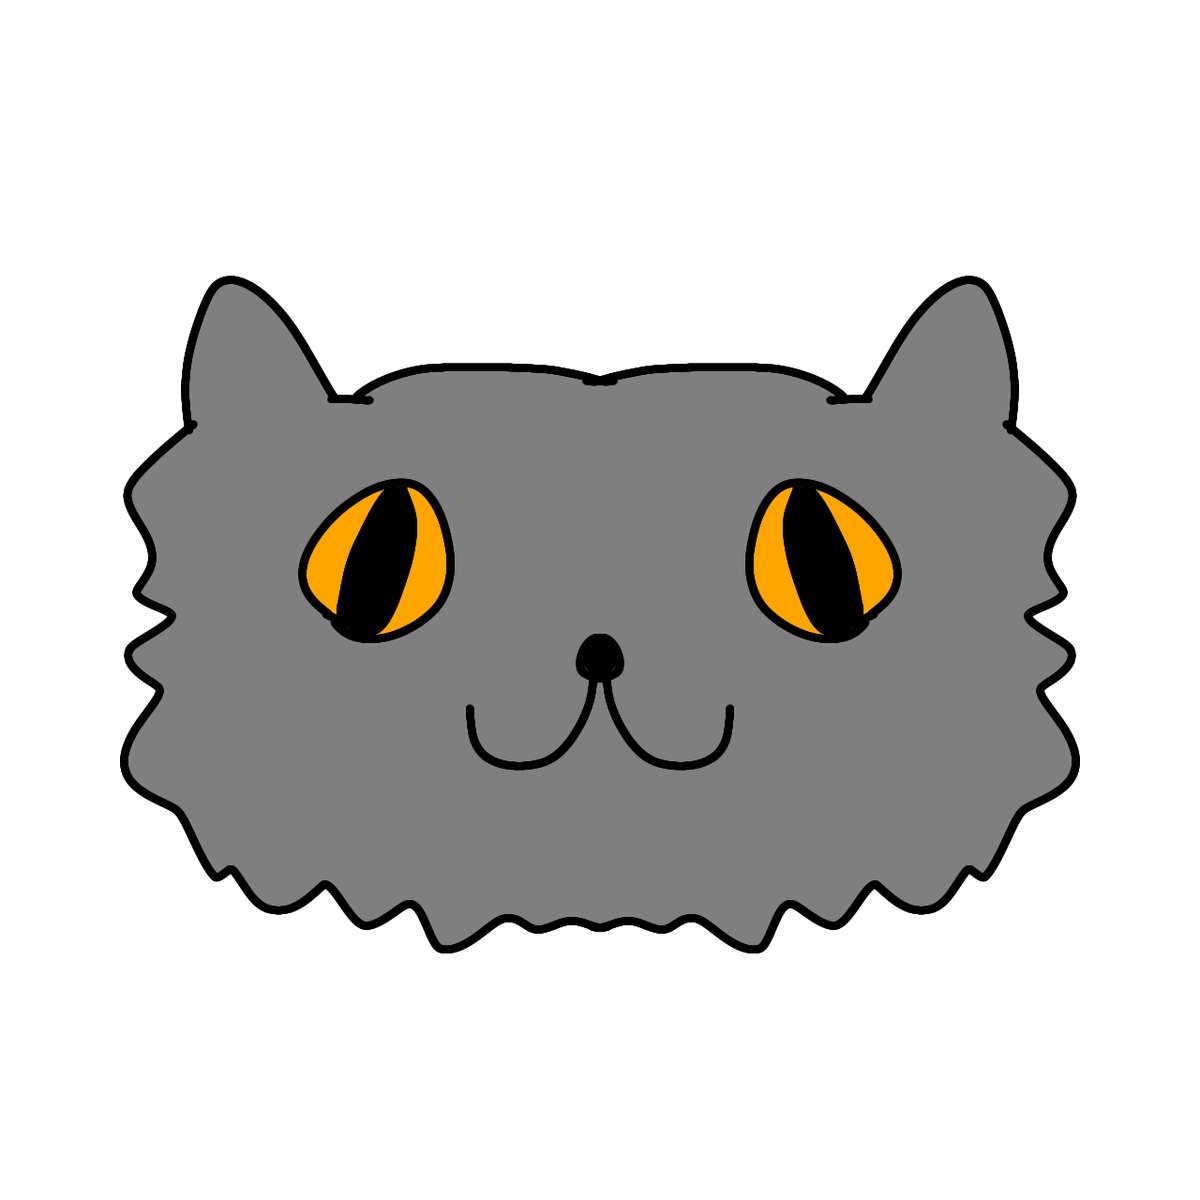 Gatto grigio con occhi color ambra (Sirosmug) puzzle online